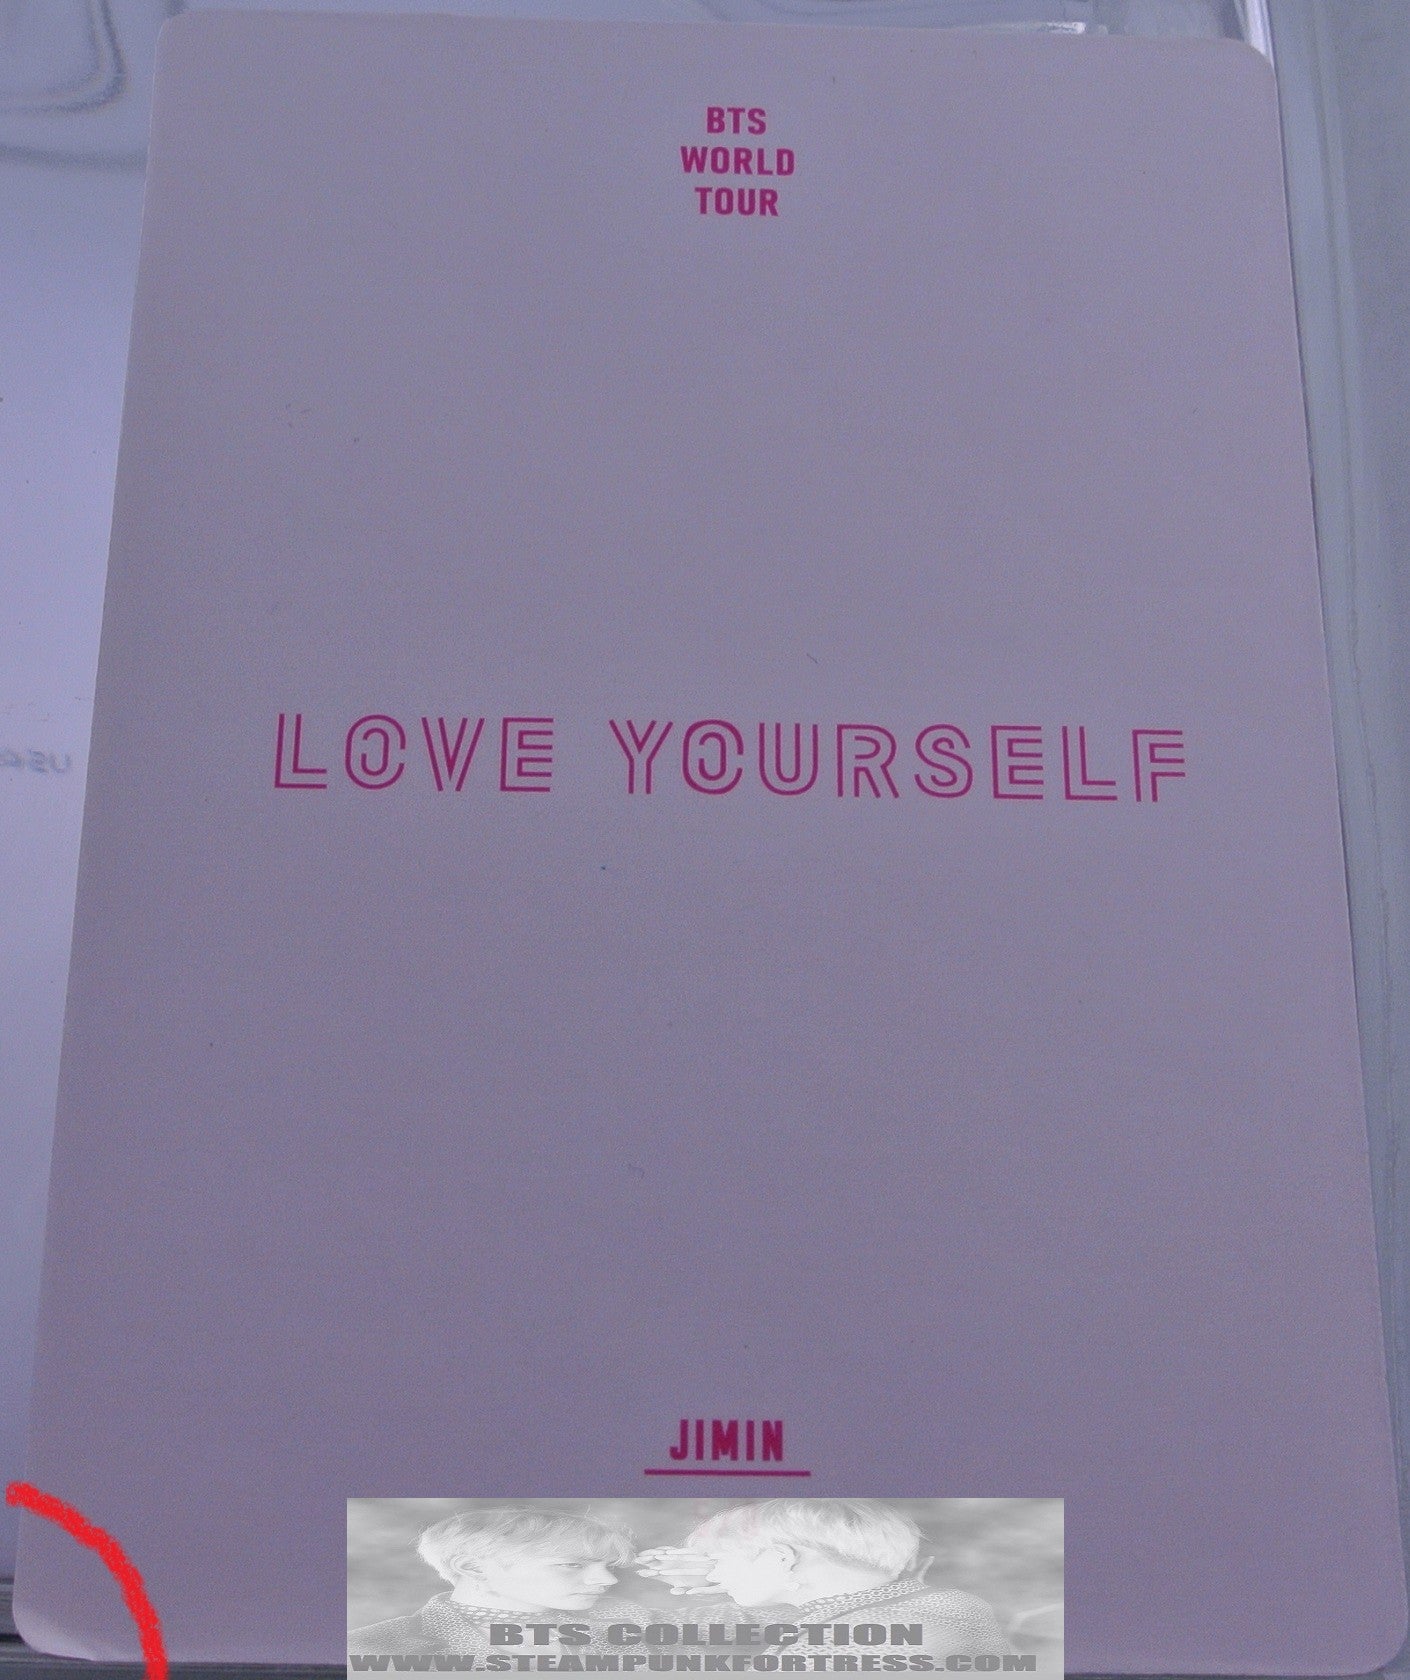 BTS PARK JIMIN LOVE YOURSELF WORLD TOUR PHOTOCARD PHOTO CARD #5 OFFICIAL MERCHANDISE